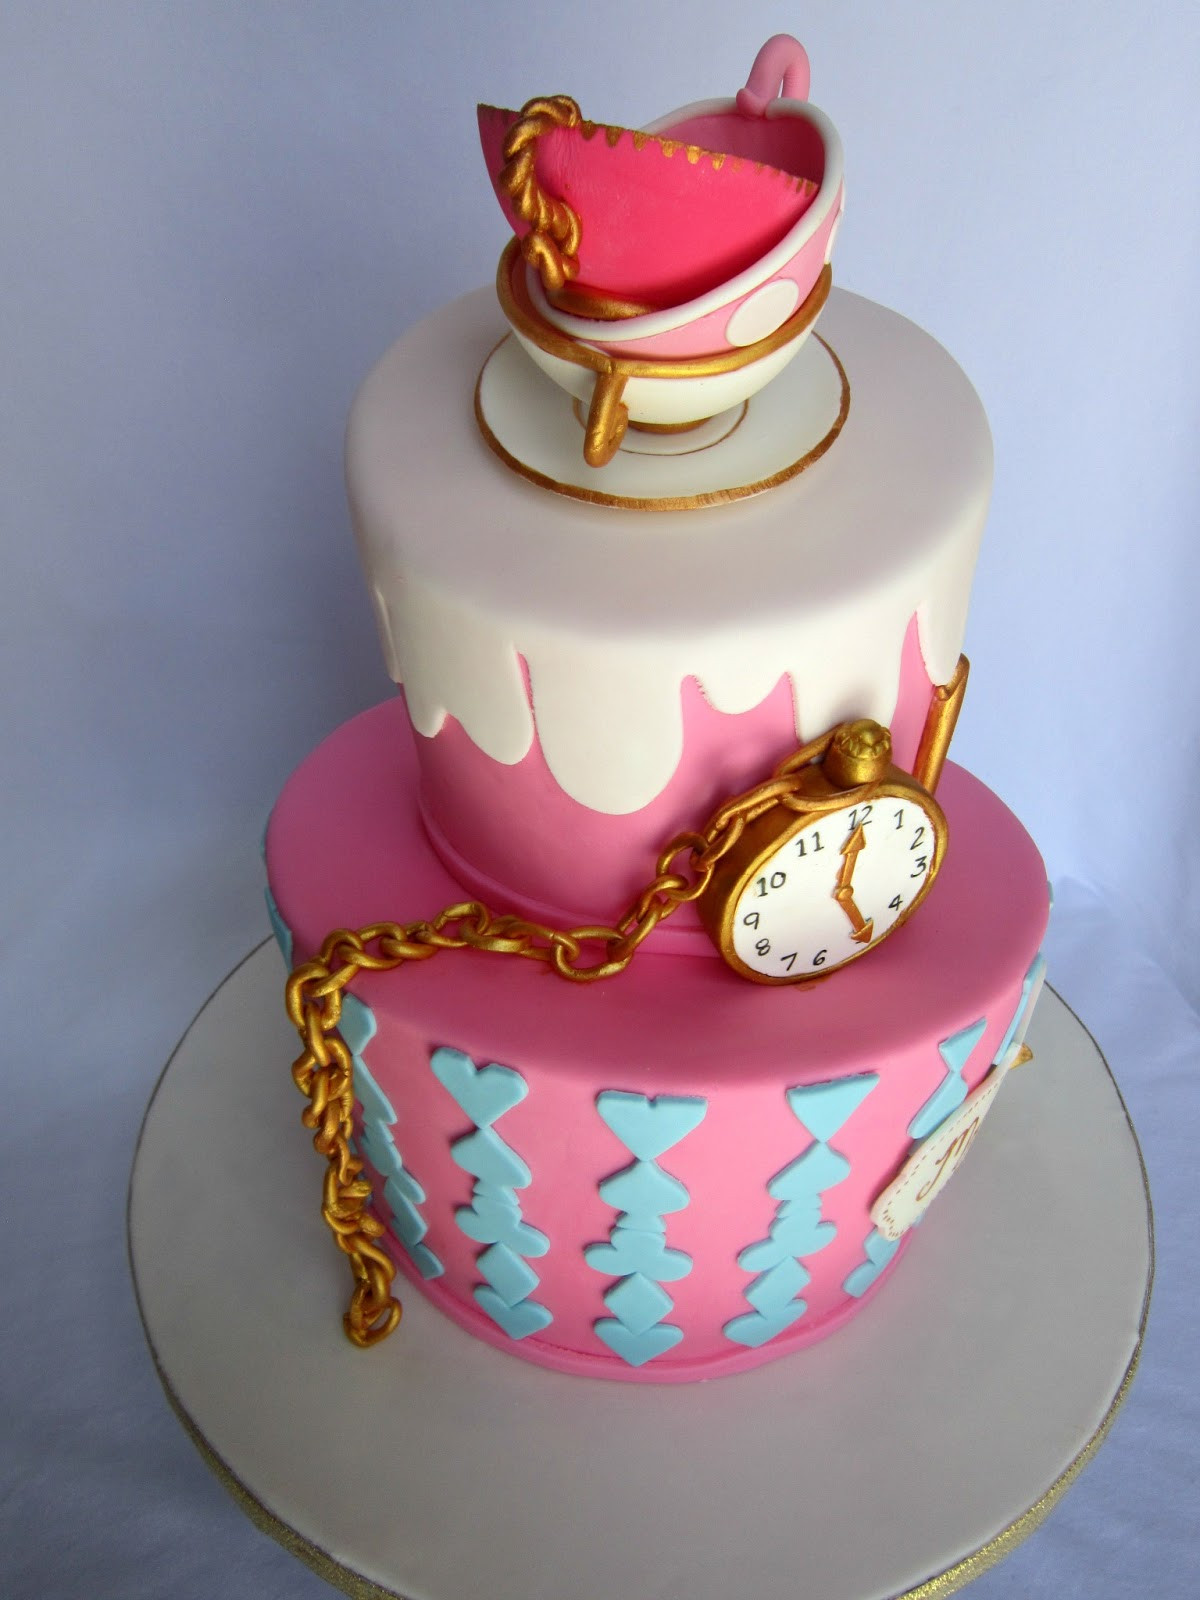 Alice In Wonderland Birthday Cake
 Delectable Cakes "Alice in Wonderland" Teacup Birthday Cake